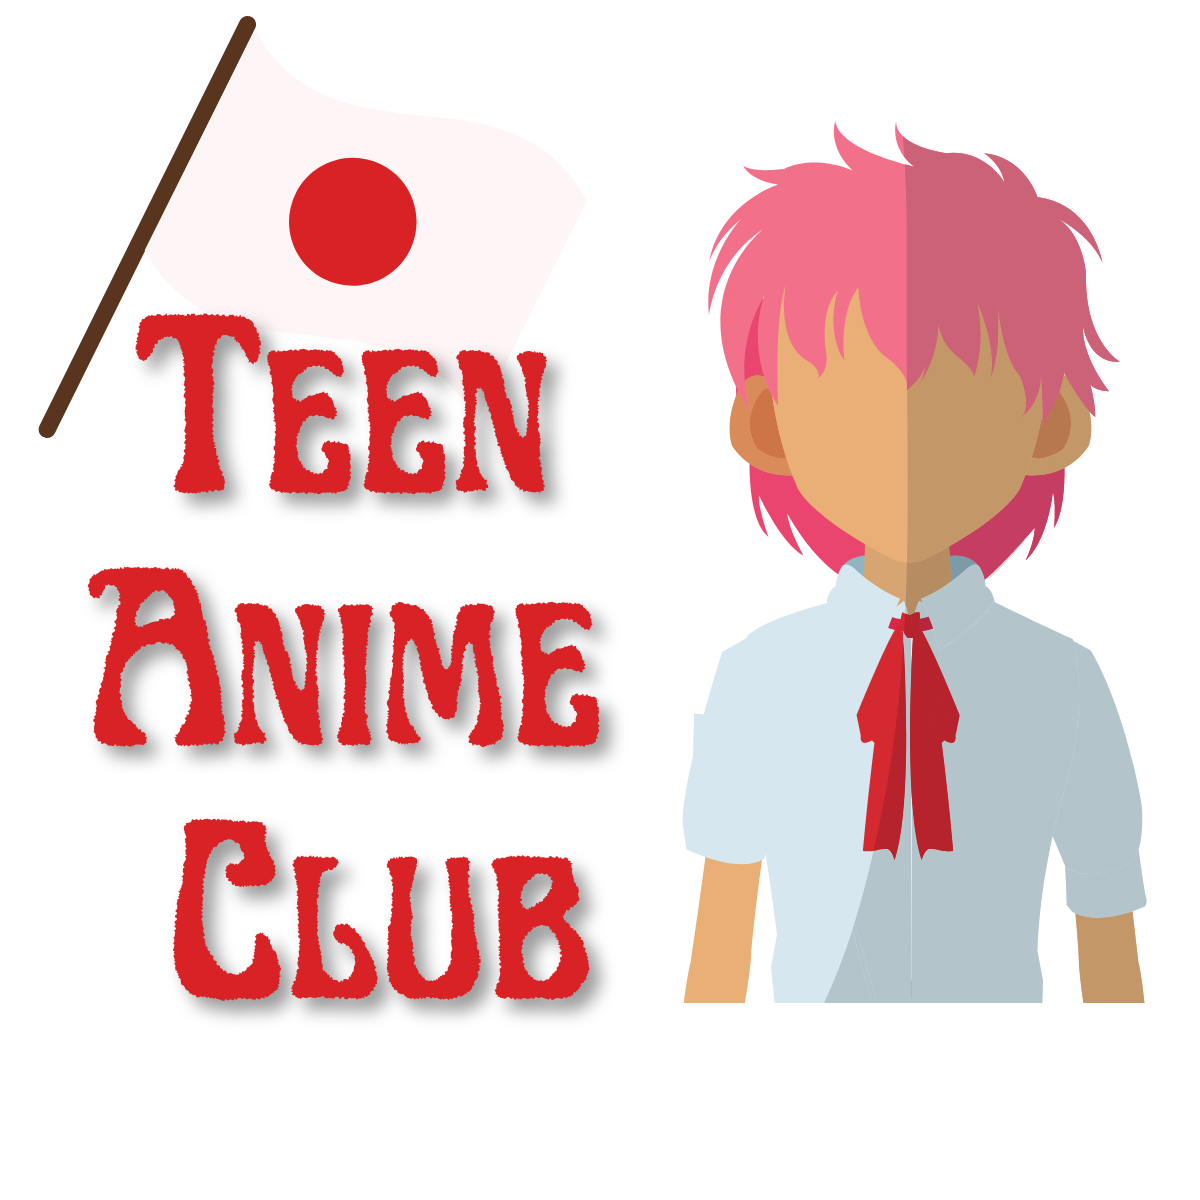 Teen Anime Club with Japanese flag and anime girl